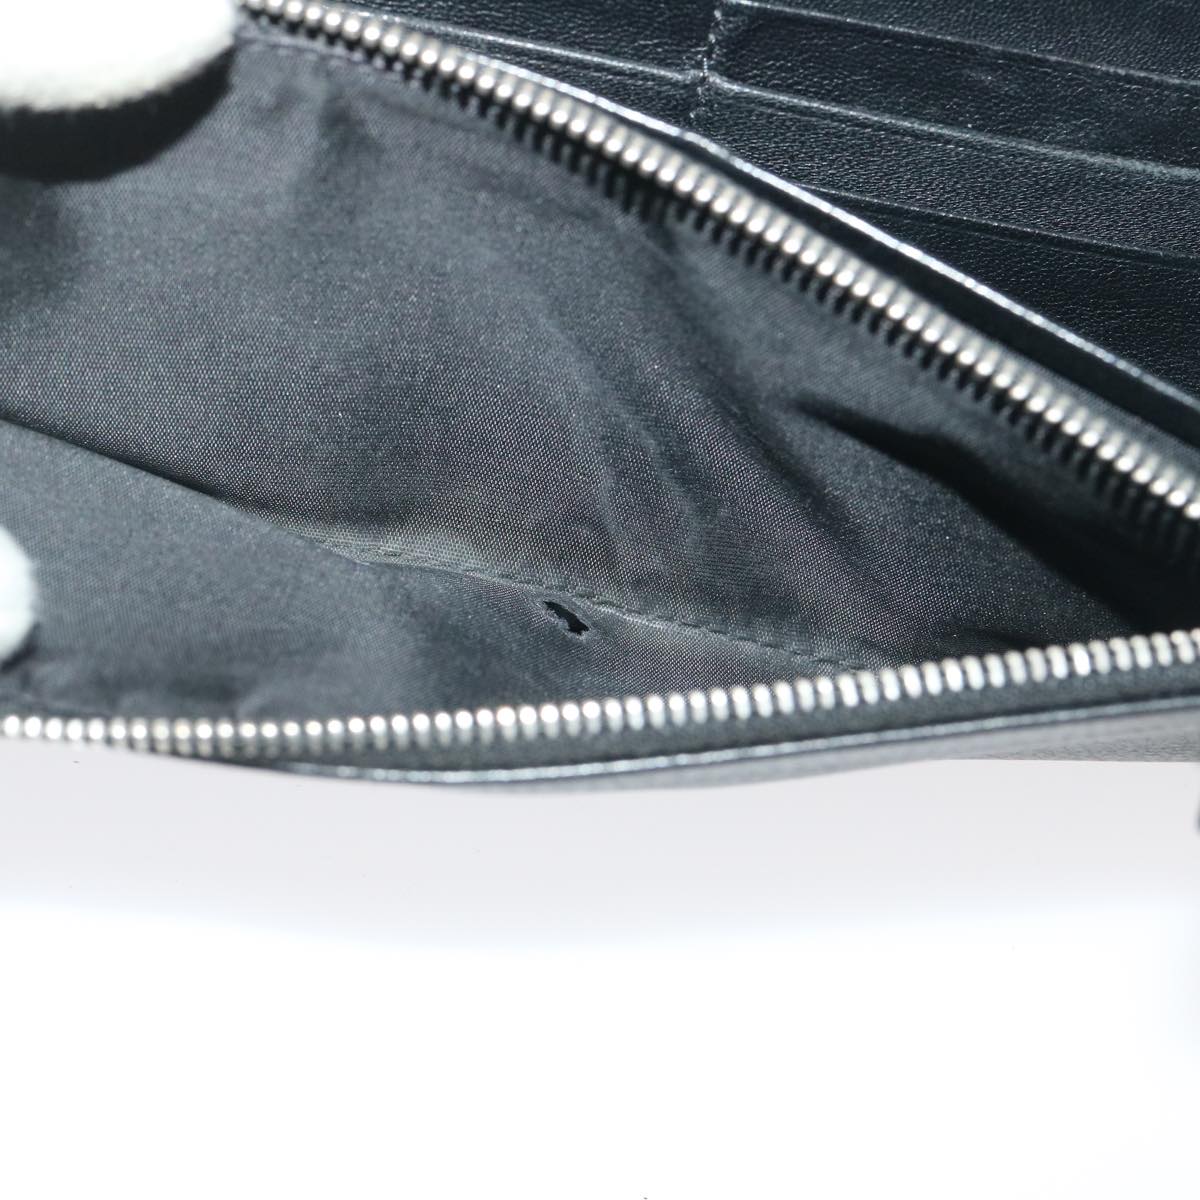 FENDI HERMES BALENCIAGA BVLGARI Key Case Wallet Leather 5Set Black Brown am2462g